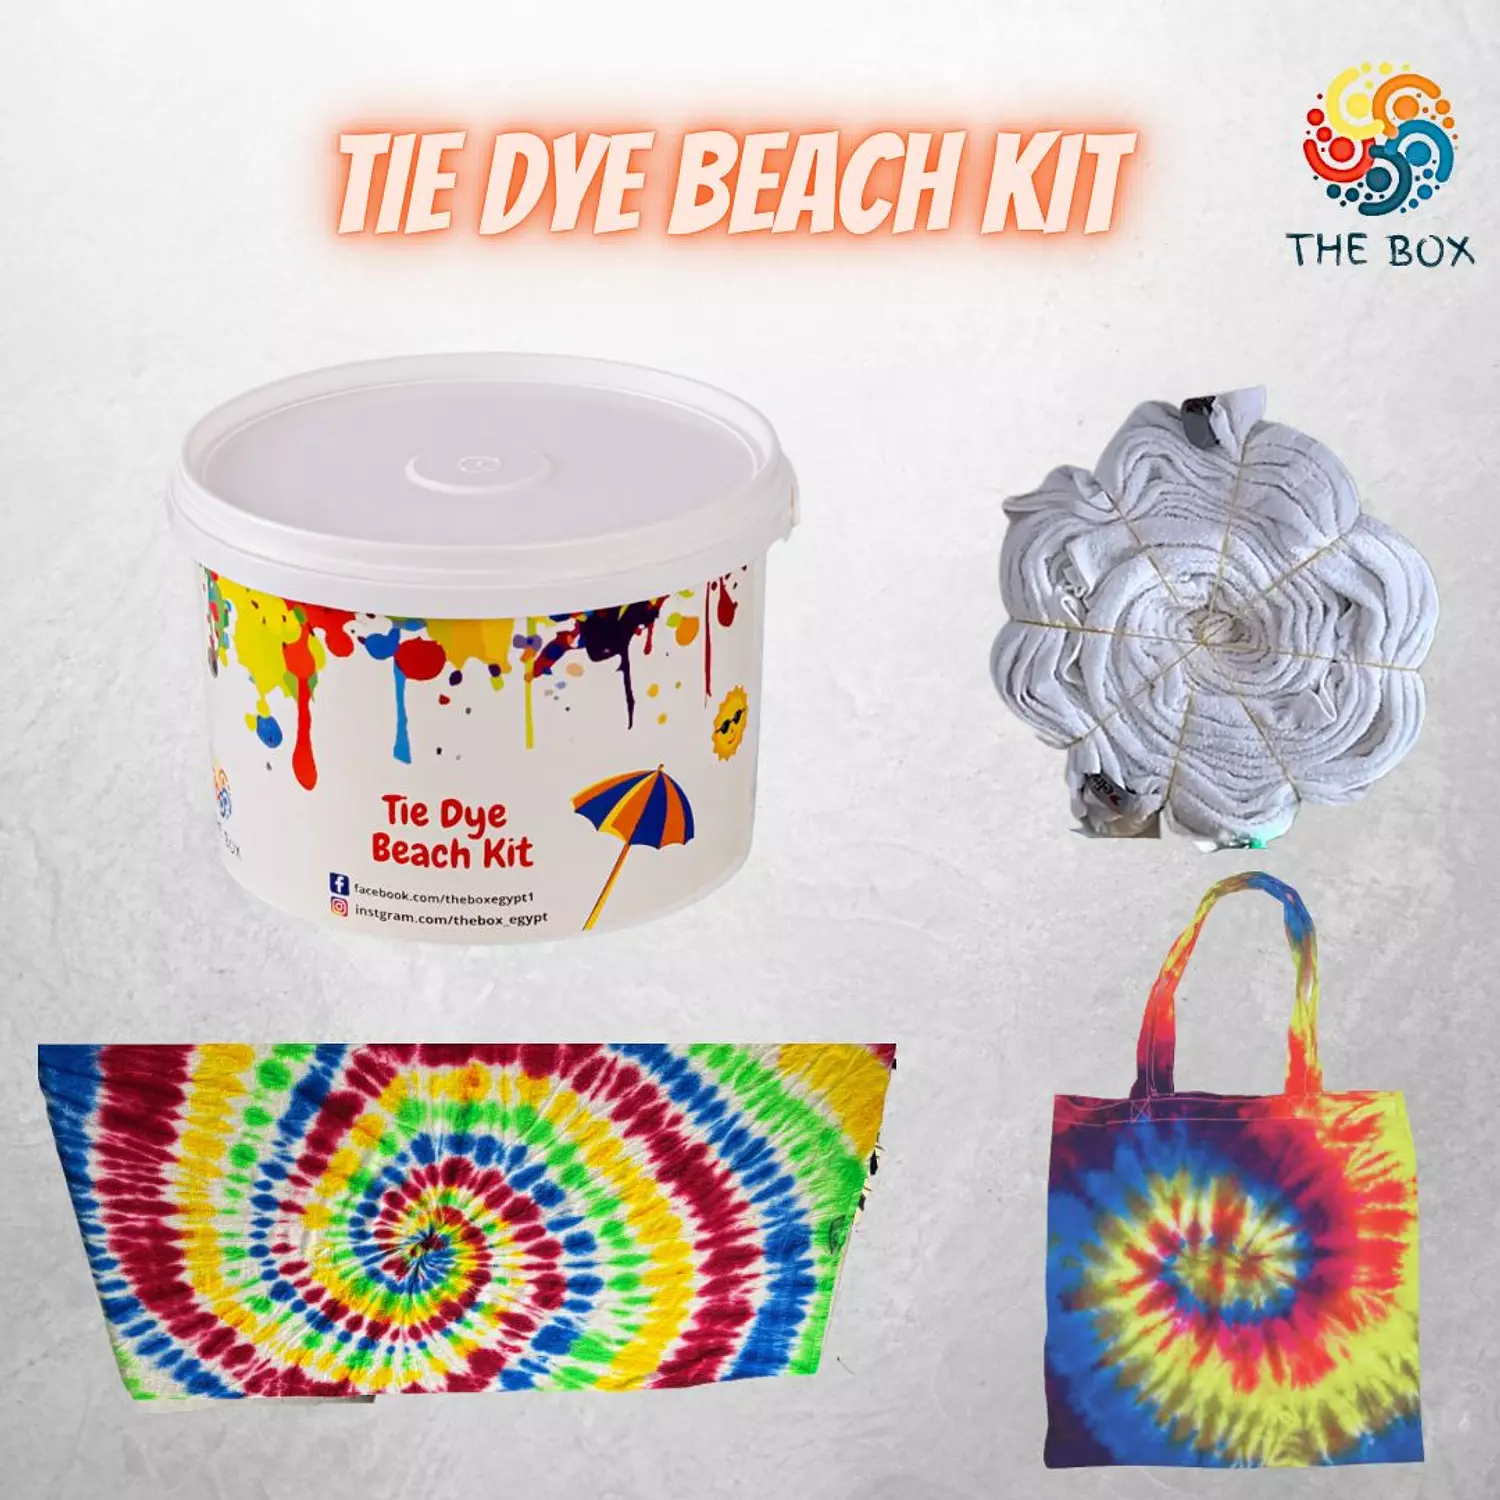 Tie dye Beach kit hover image